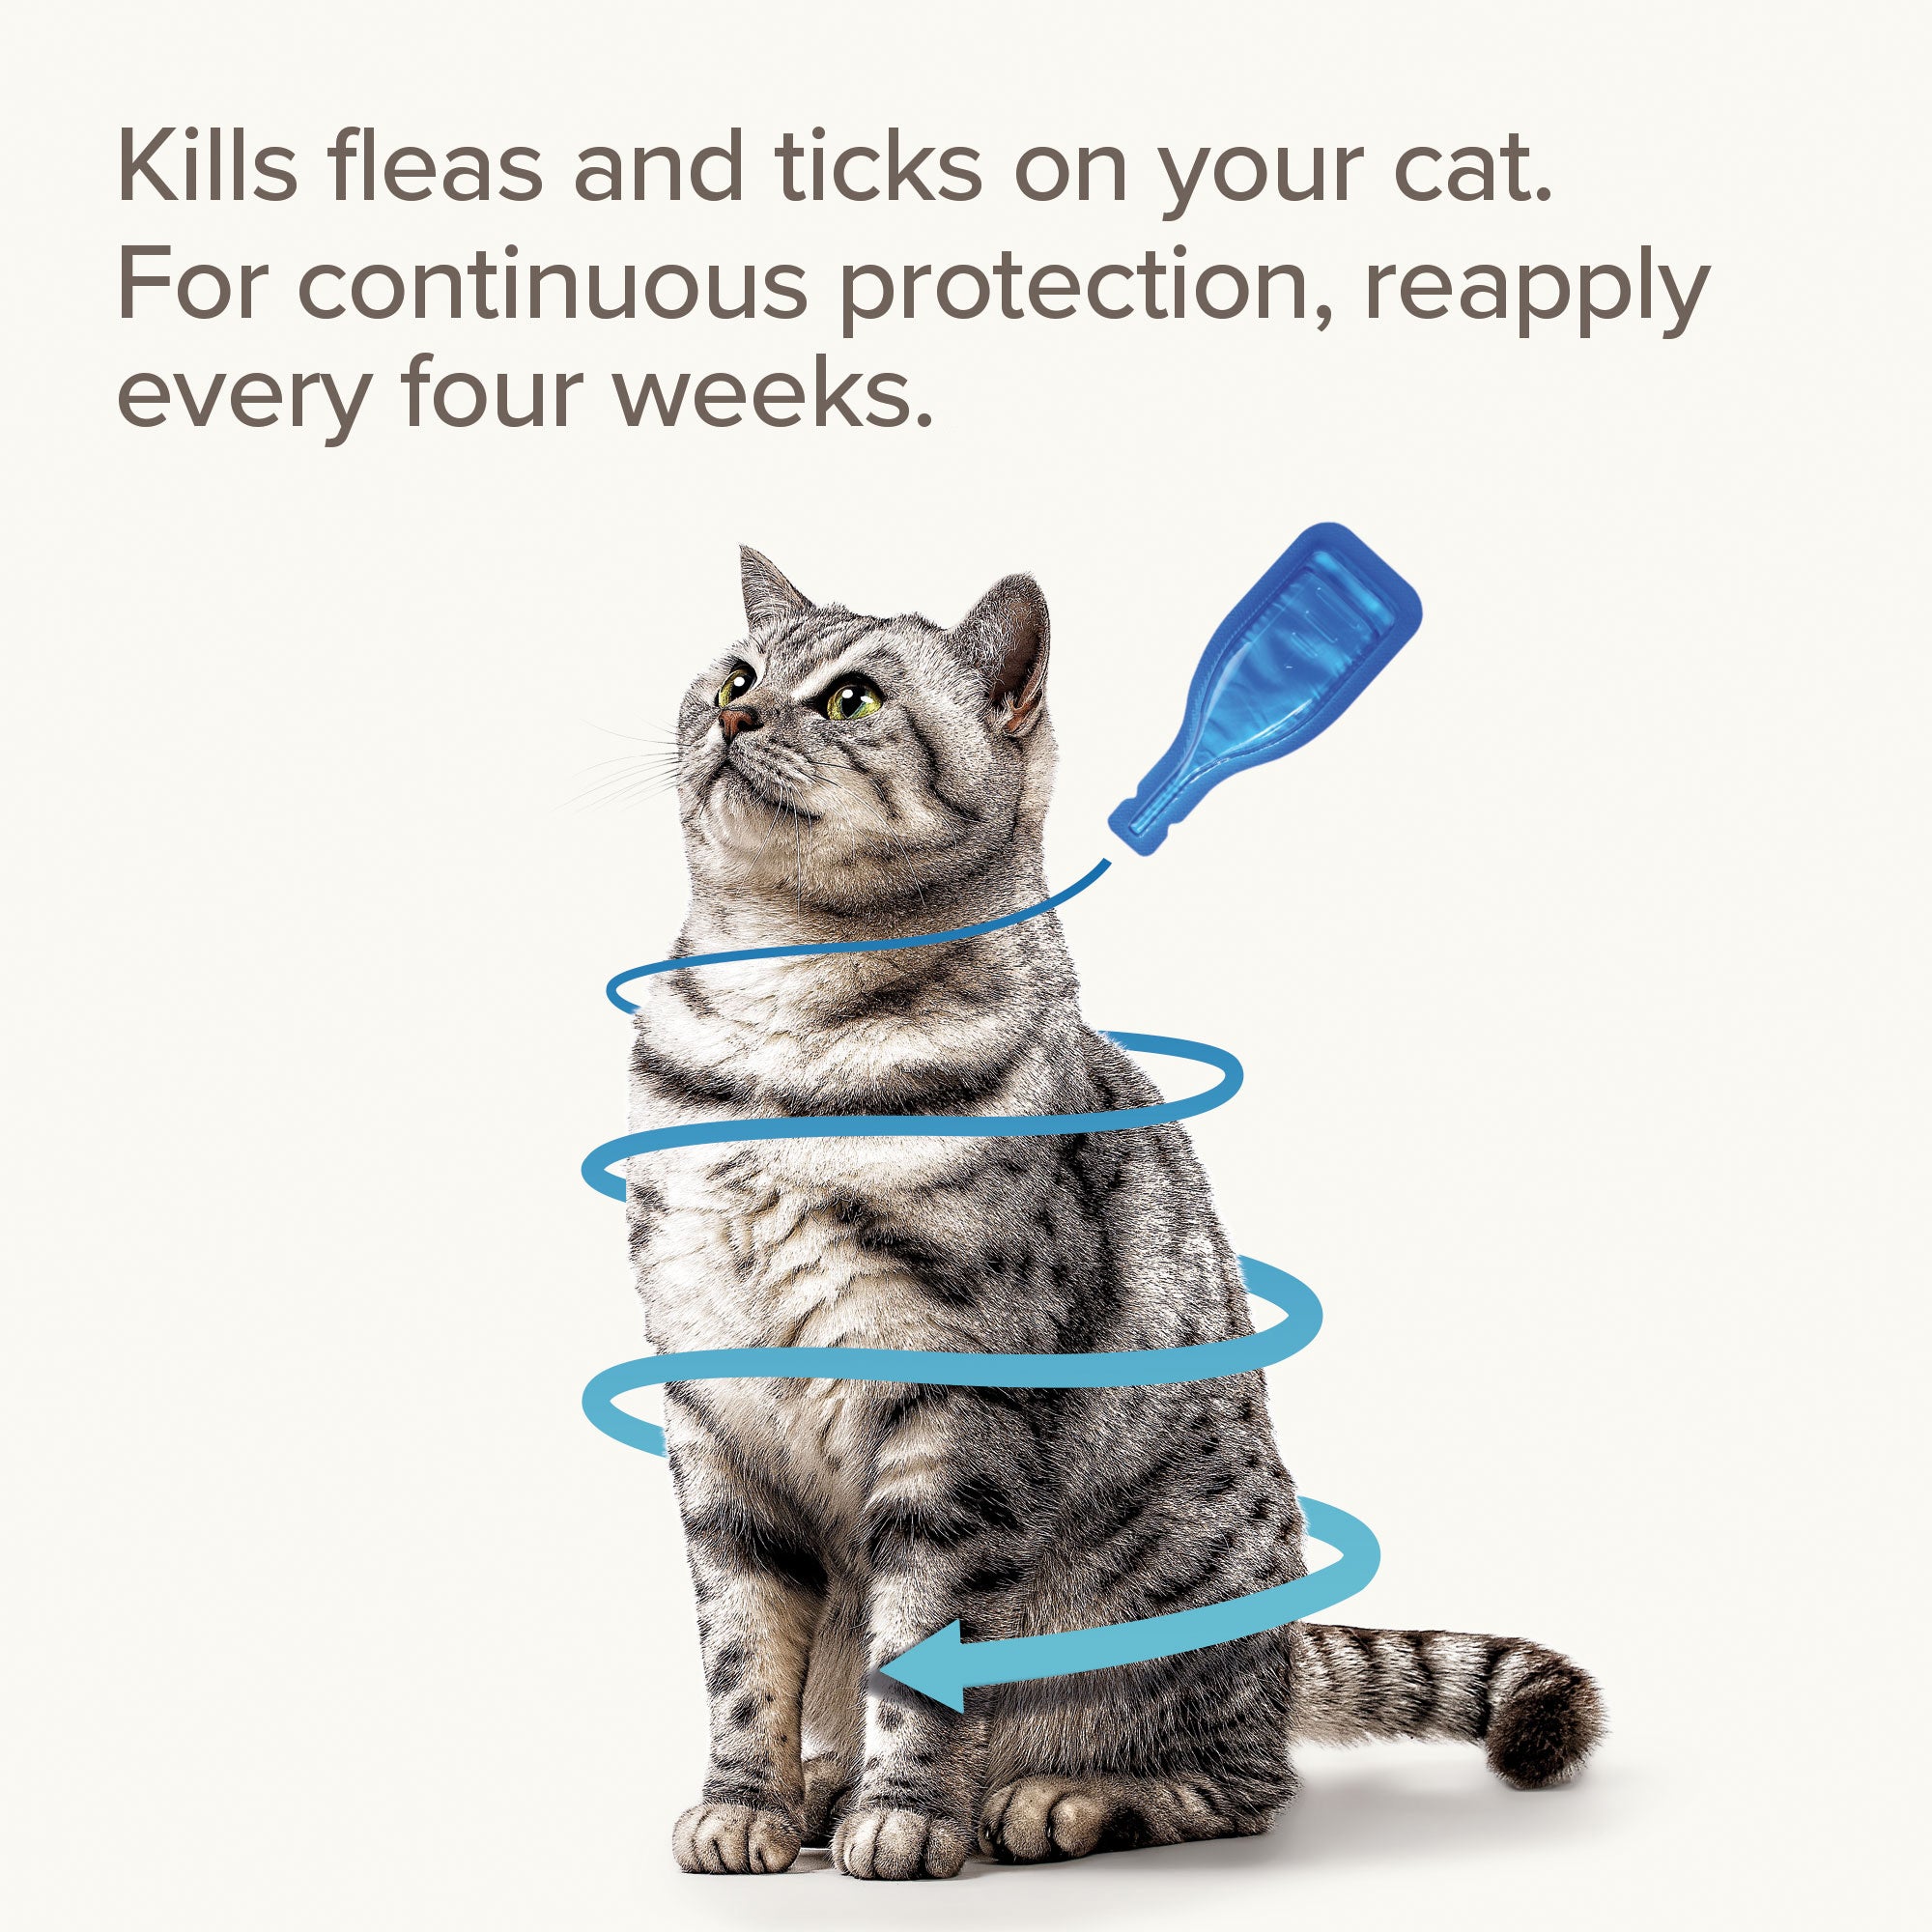 Beaphar Fiprotec Spot On Flea / Tick Treatment for Cats